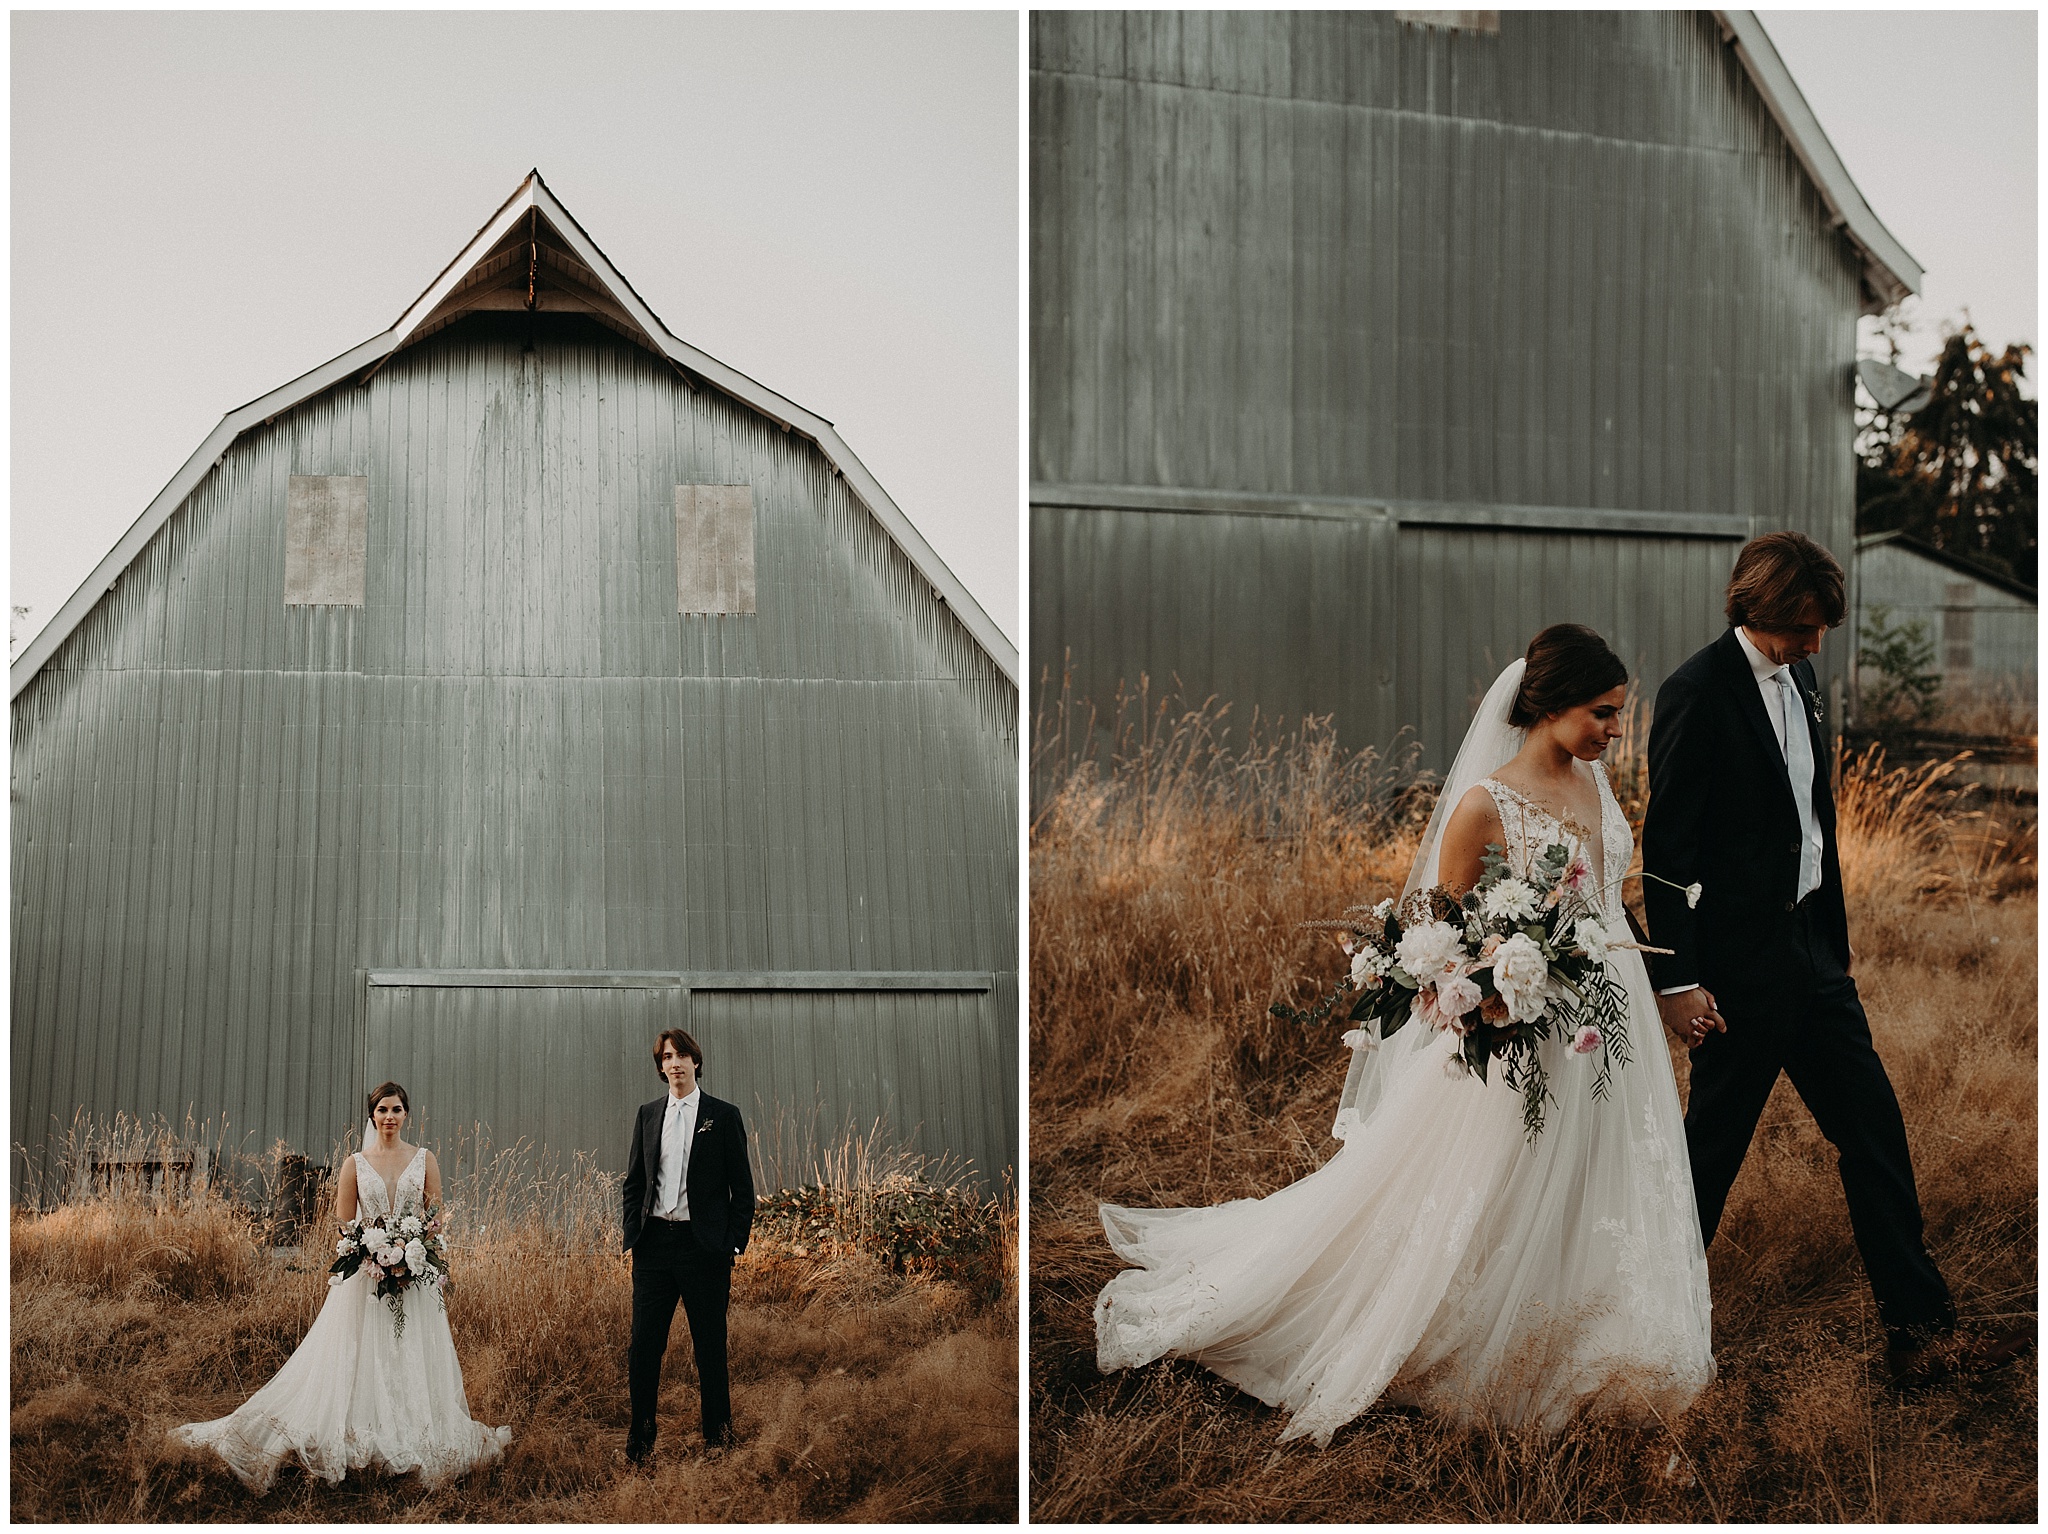 A barn wedding venue in Langley